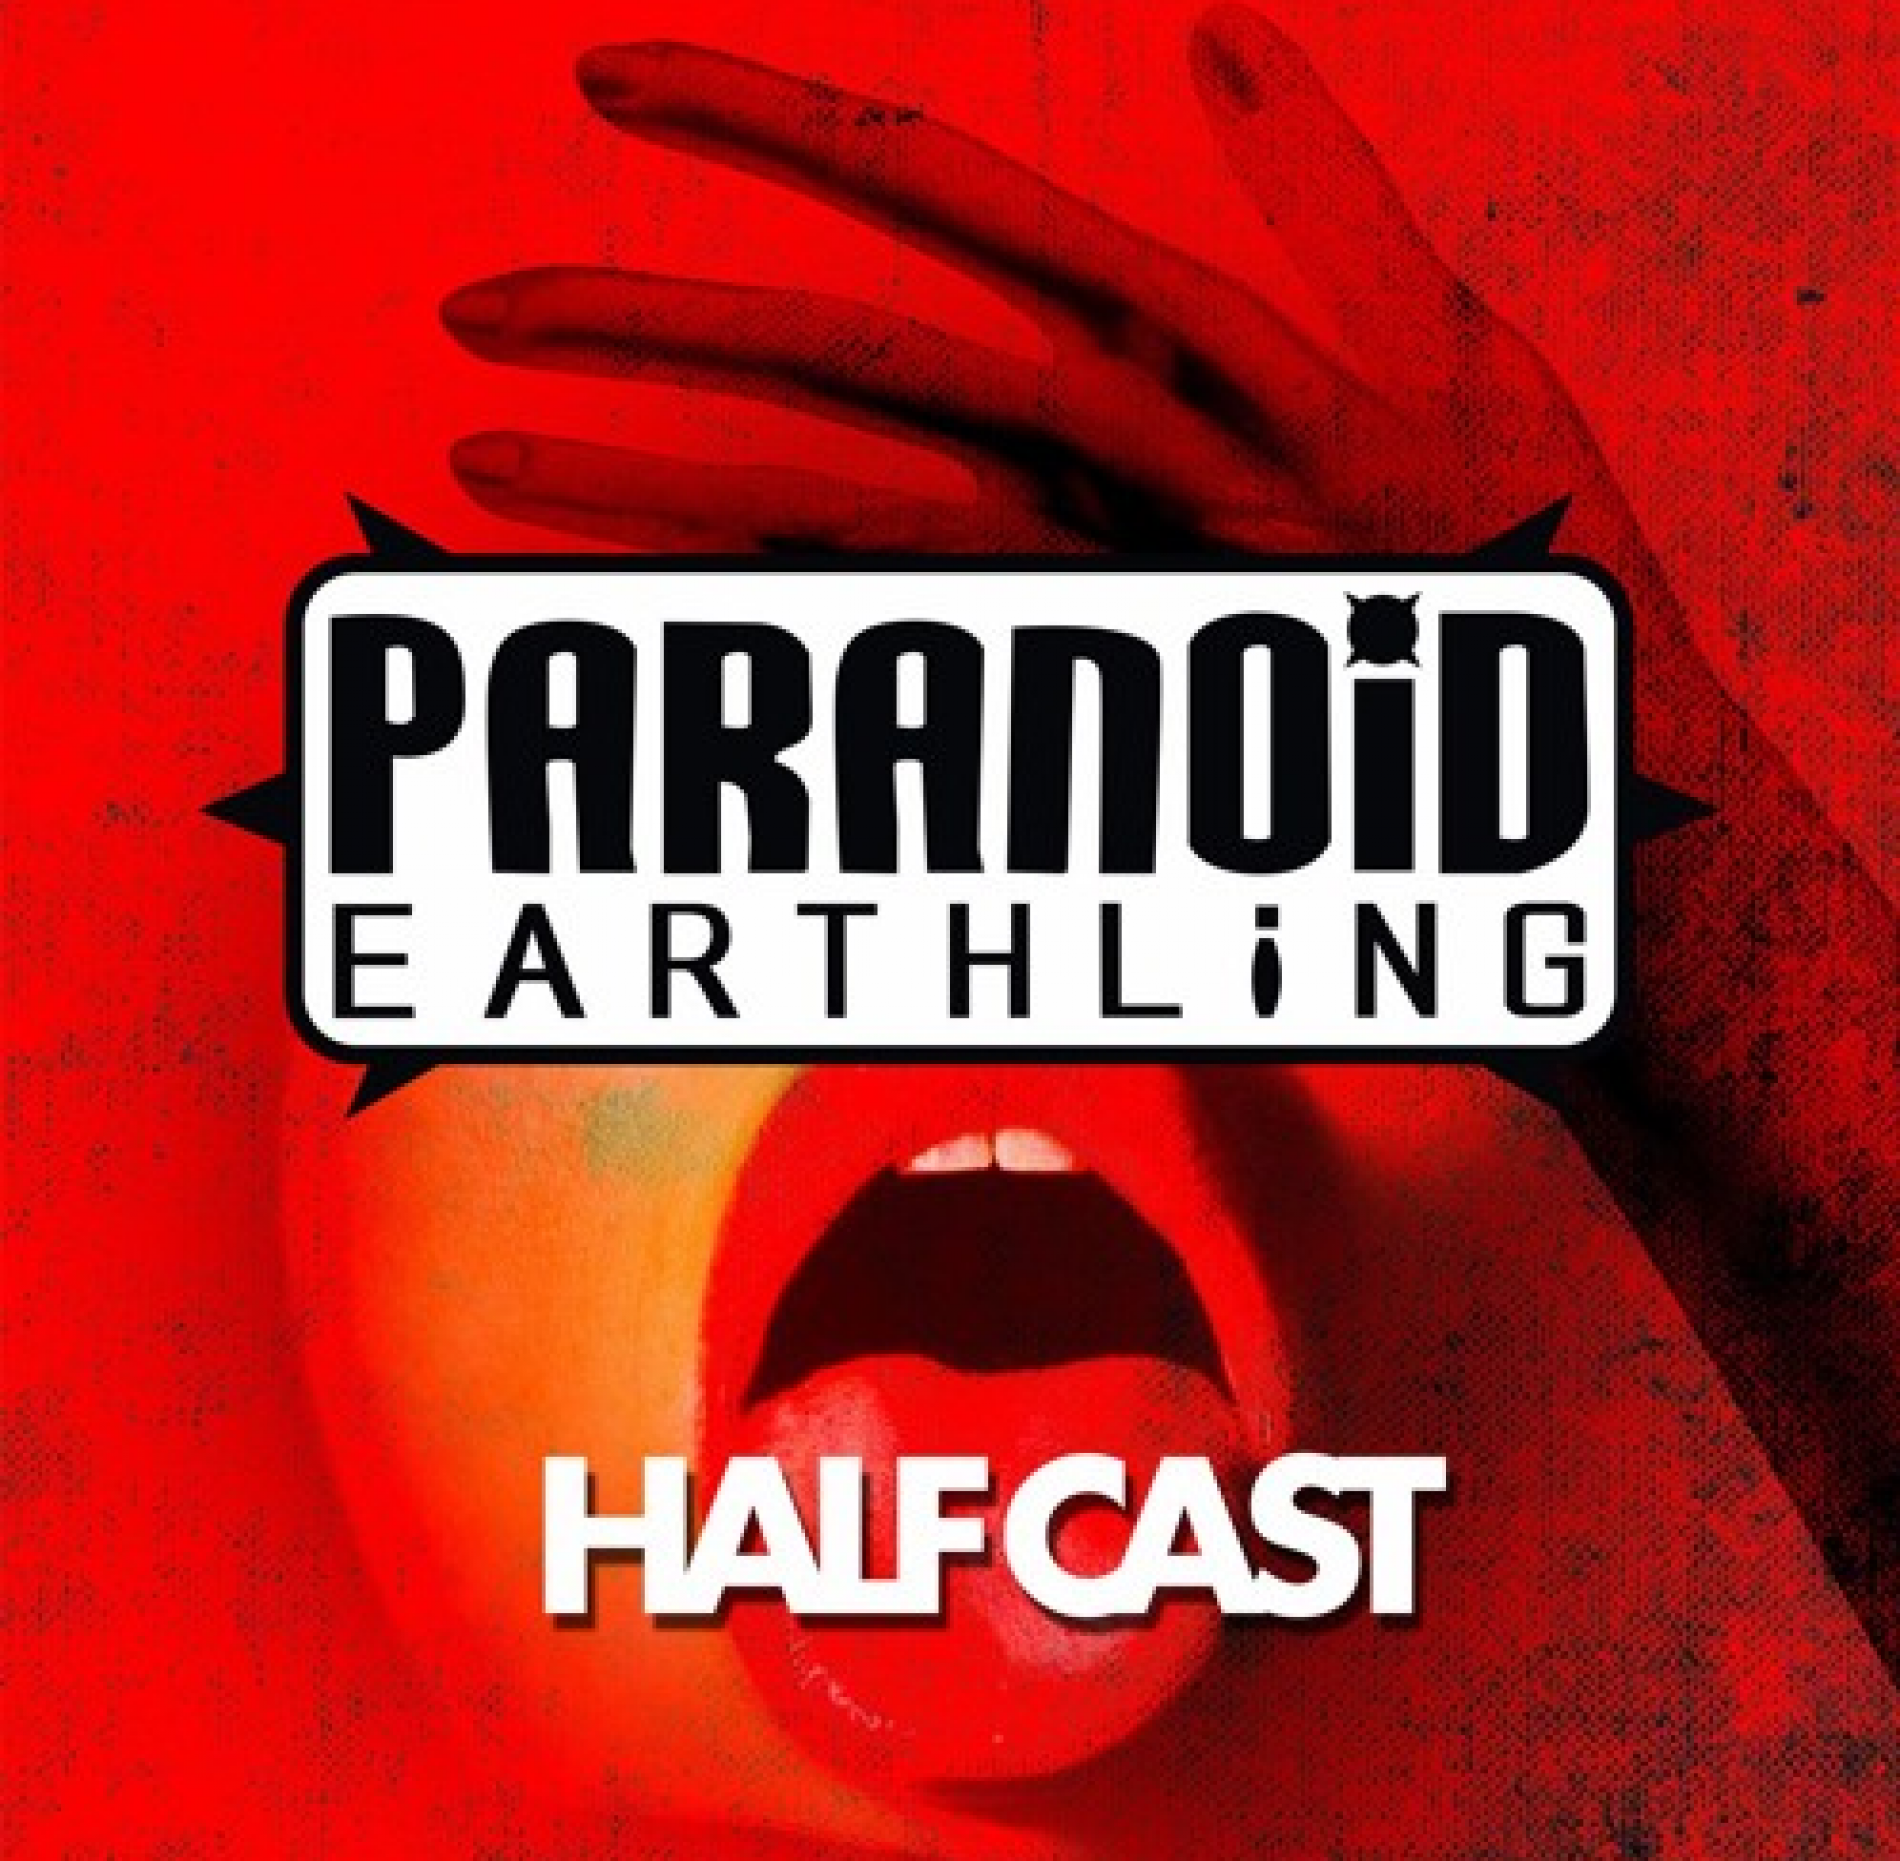 Paranoid Earthling : Halfcast